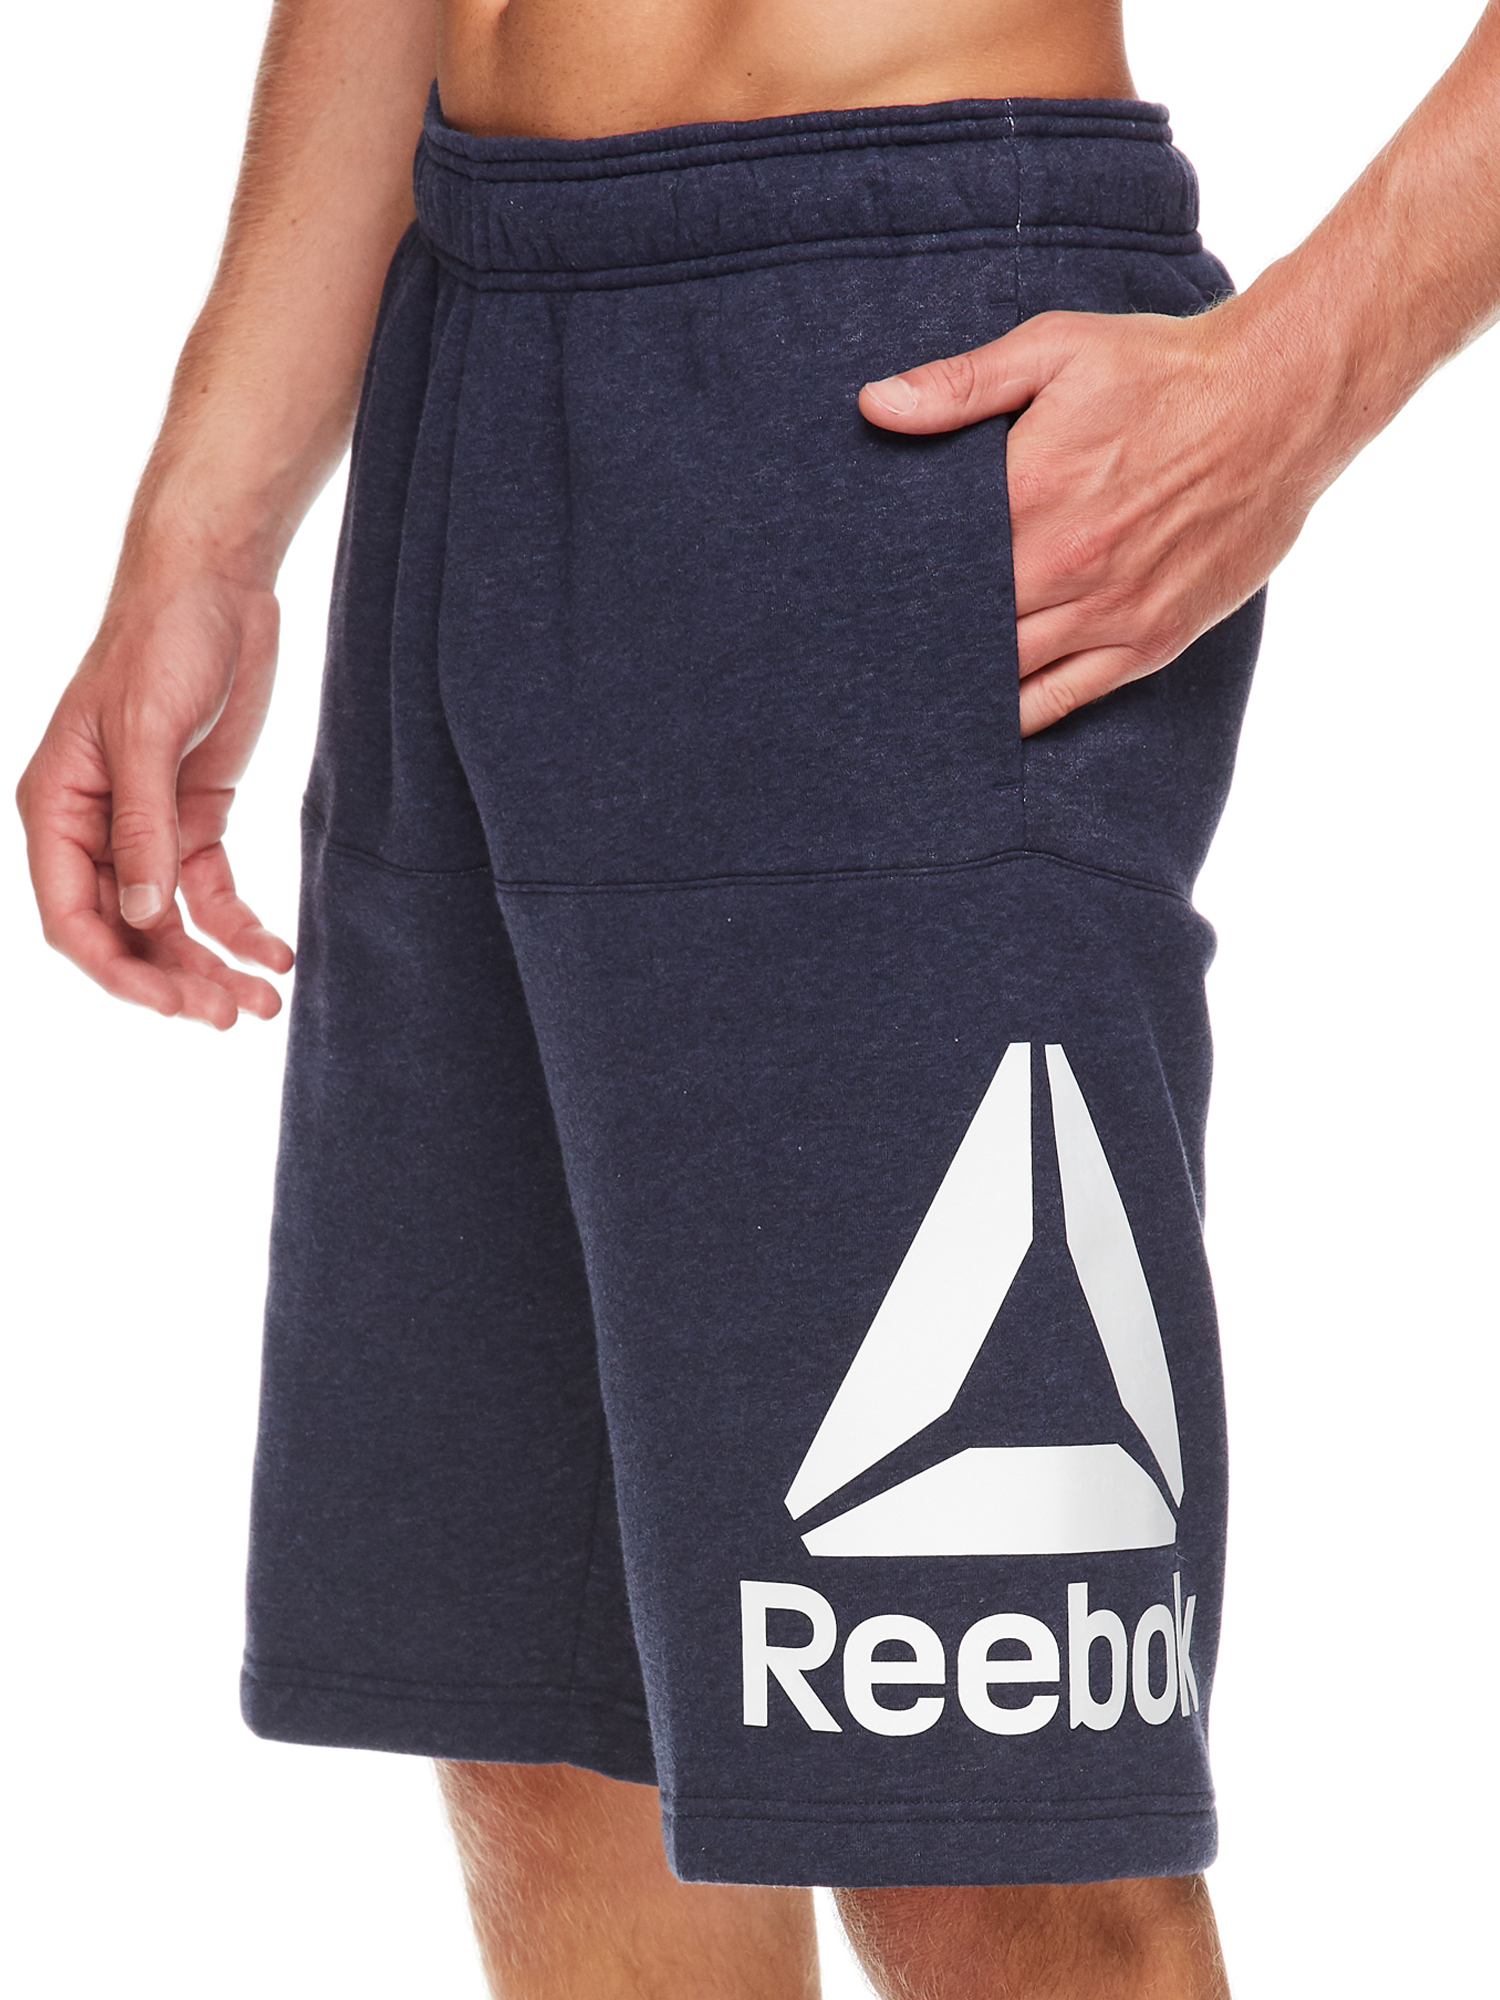 Reebok Men's Low Lift Fleece Shorts - image 2 of 4